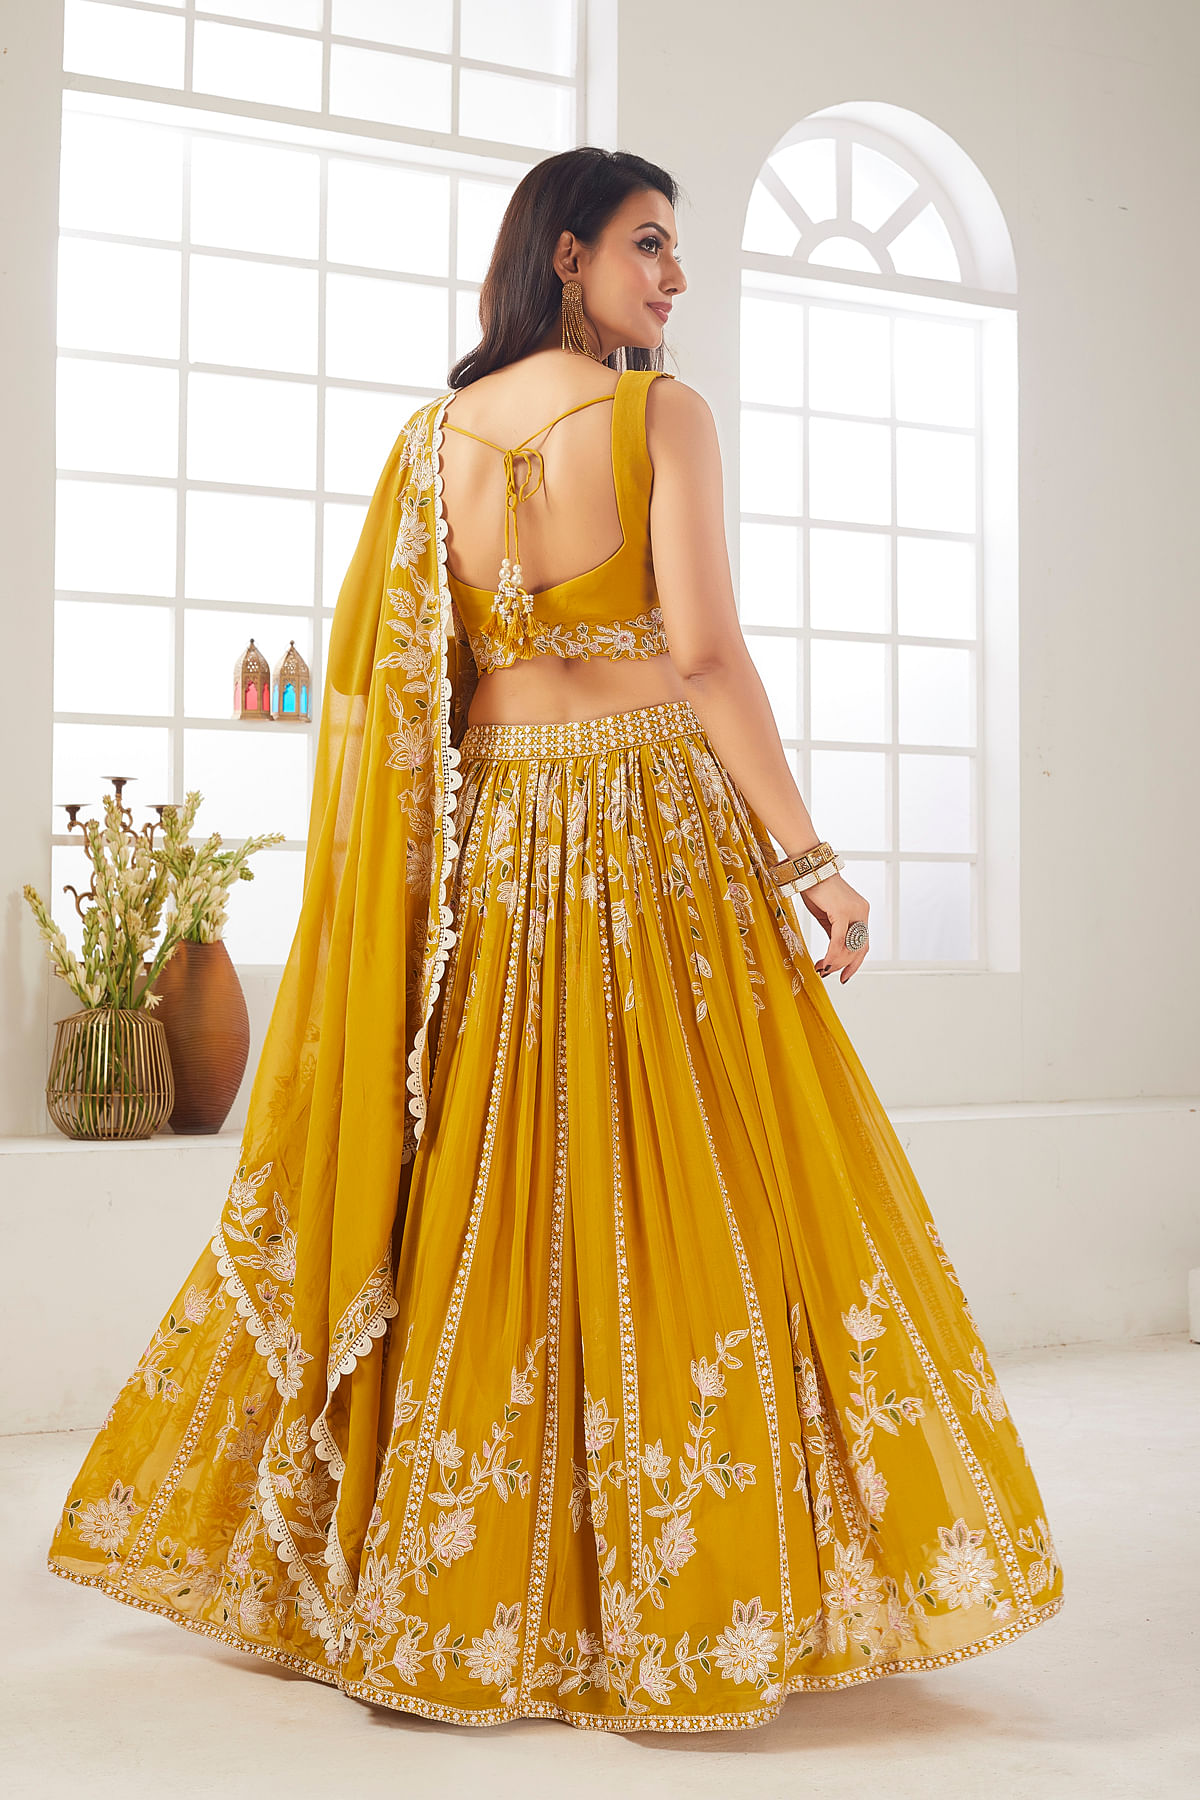 MountAlps Ram Darbar Dress, Made of Silk, Size: Choli 5 Inch + Dhoti/Lehenga  9 Inch. Dress Price in India - Buy MountAlps Ram Darbar Dress, Made of  Silk, Size: Choli 5 Inch +